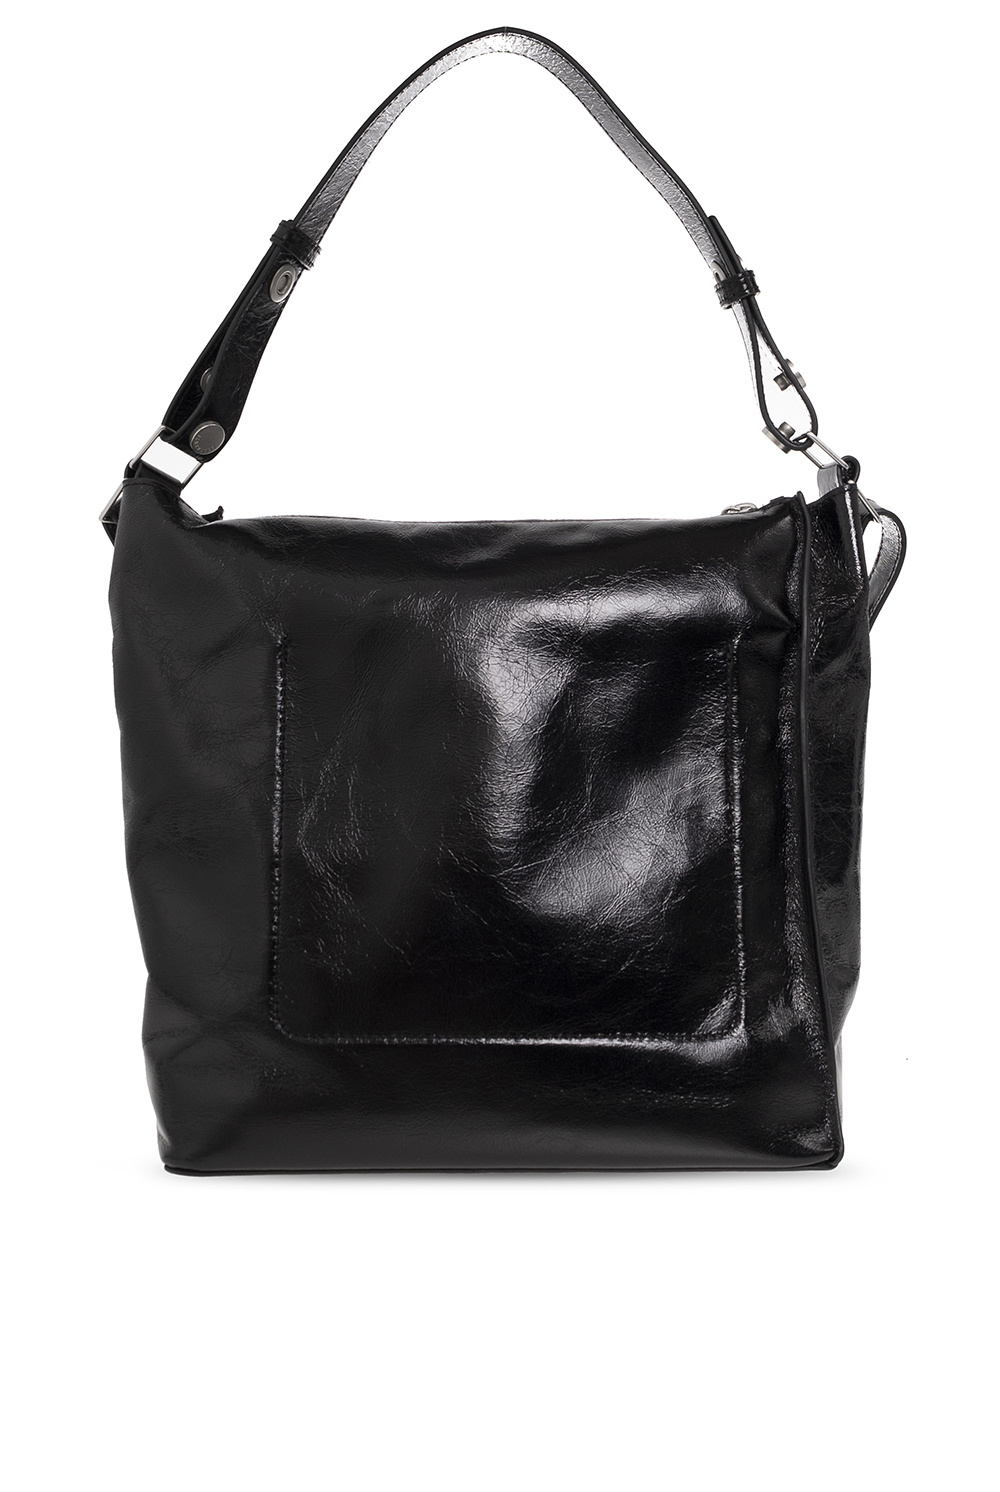 AllSaints ‘Kita’ shopper strap bag